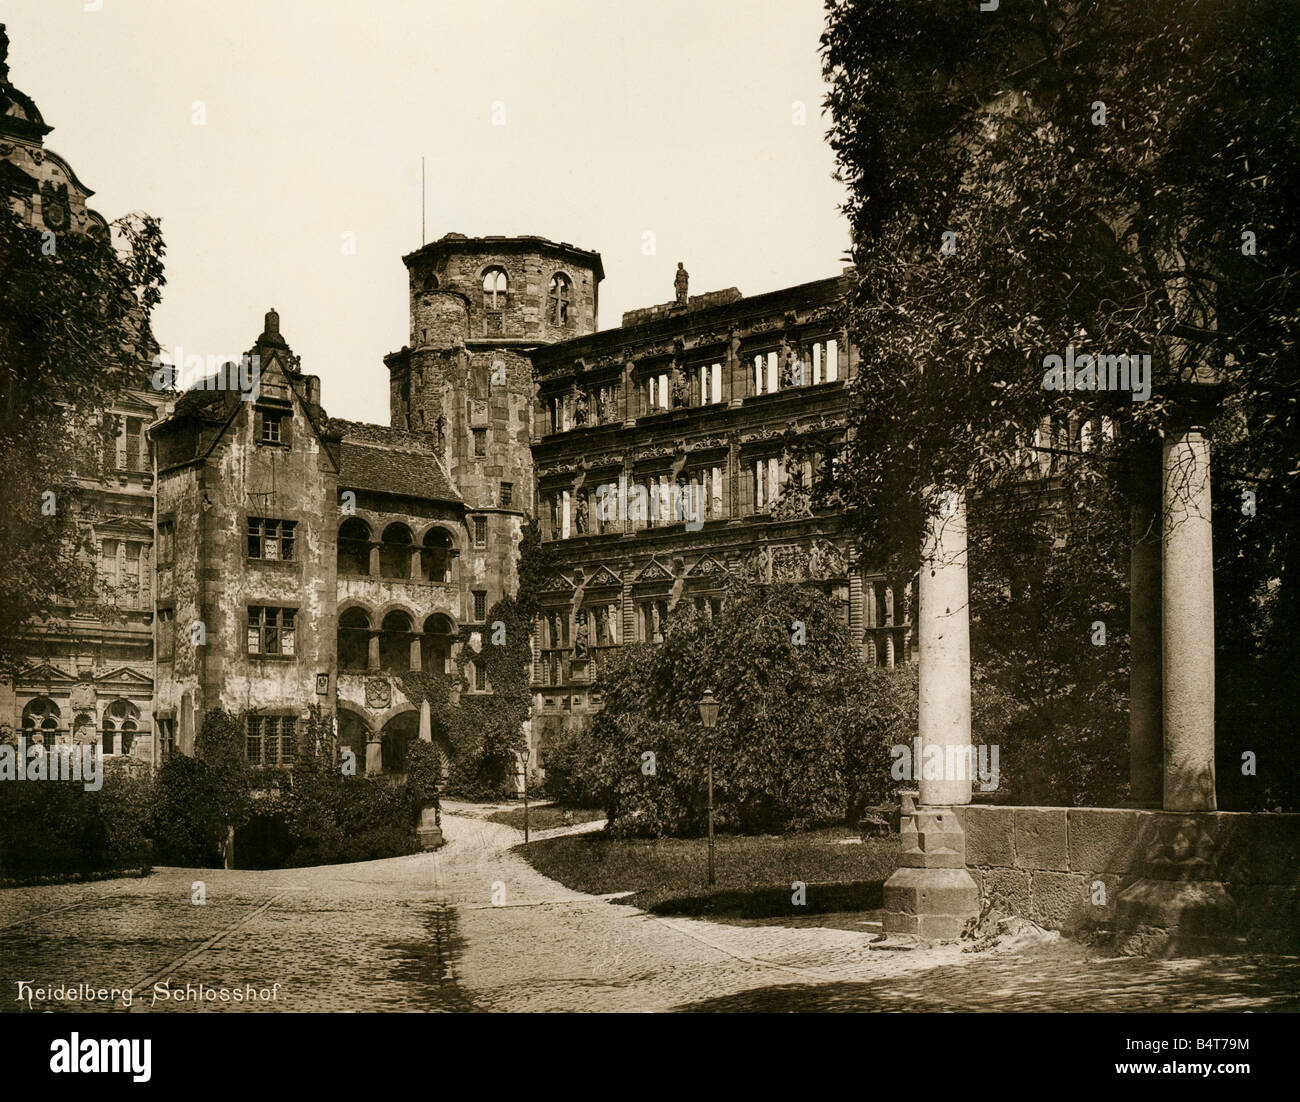 geography/travel, Germany, Heidelberg, castles, Heidelberg castle, exterior view, court, photography, circa 1910, Stock Photo